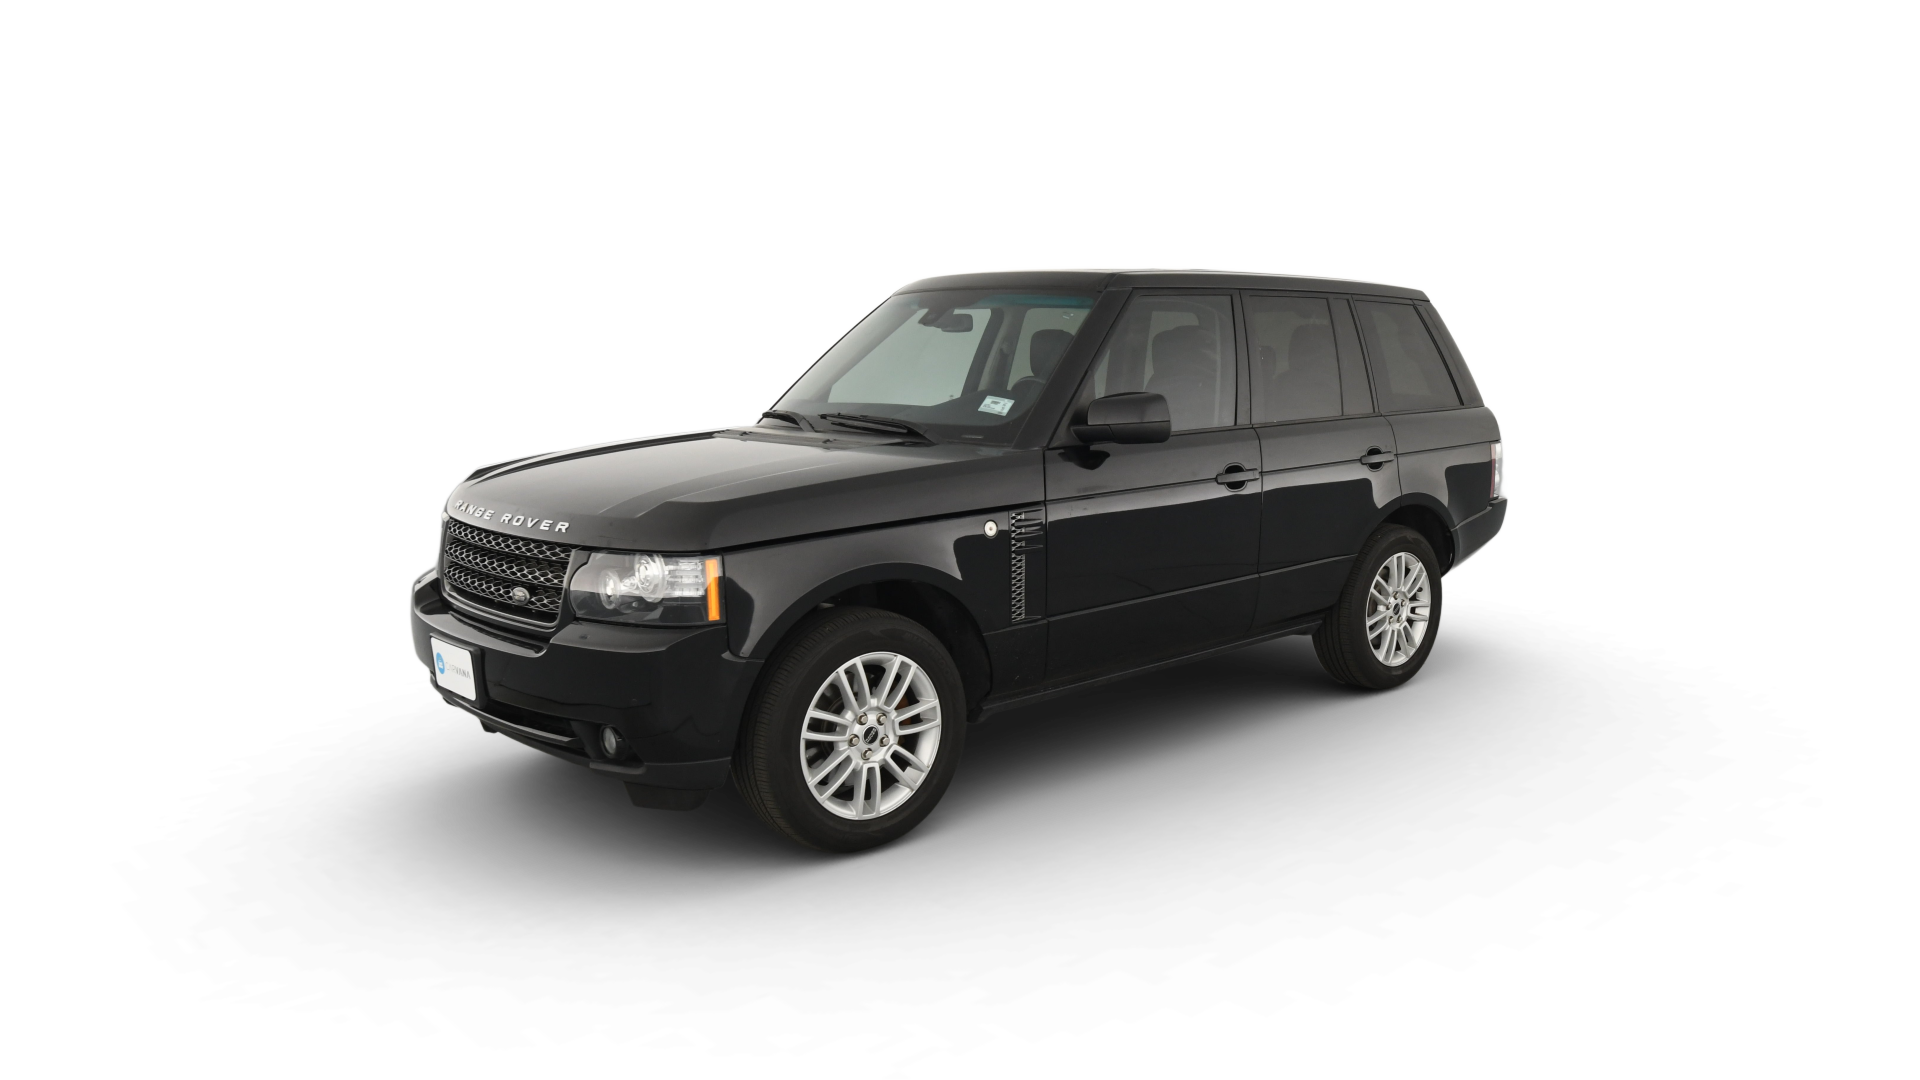 Land Rover Range Rover model image.